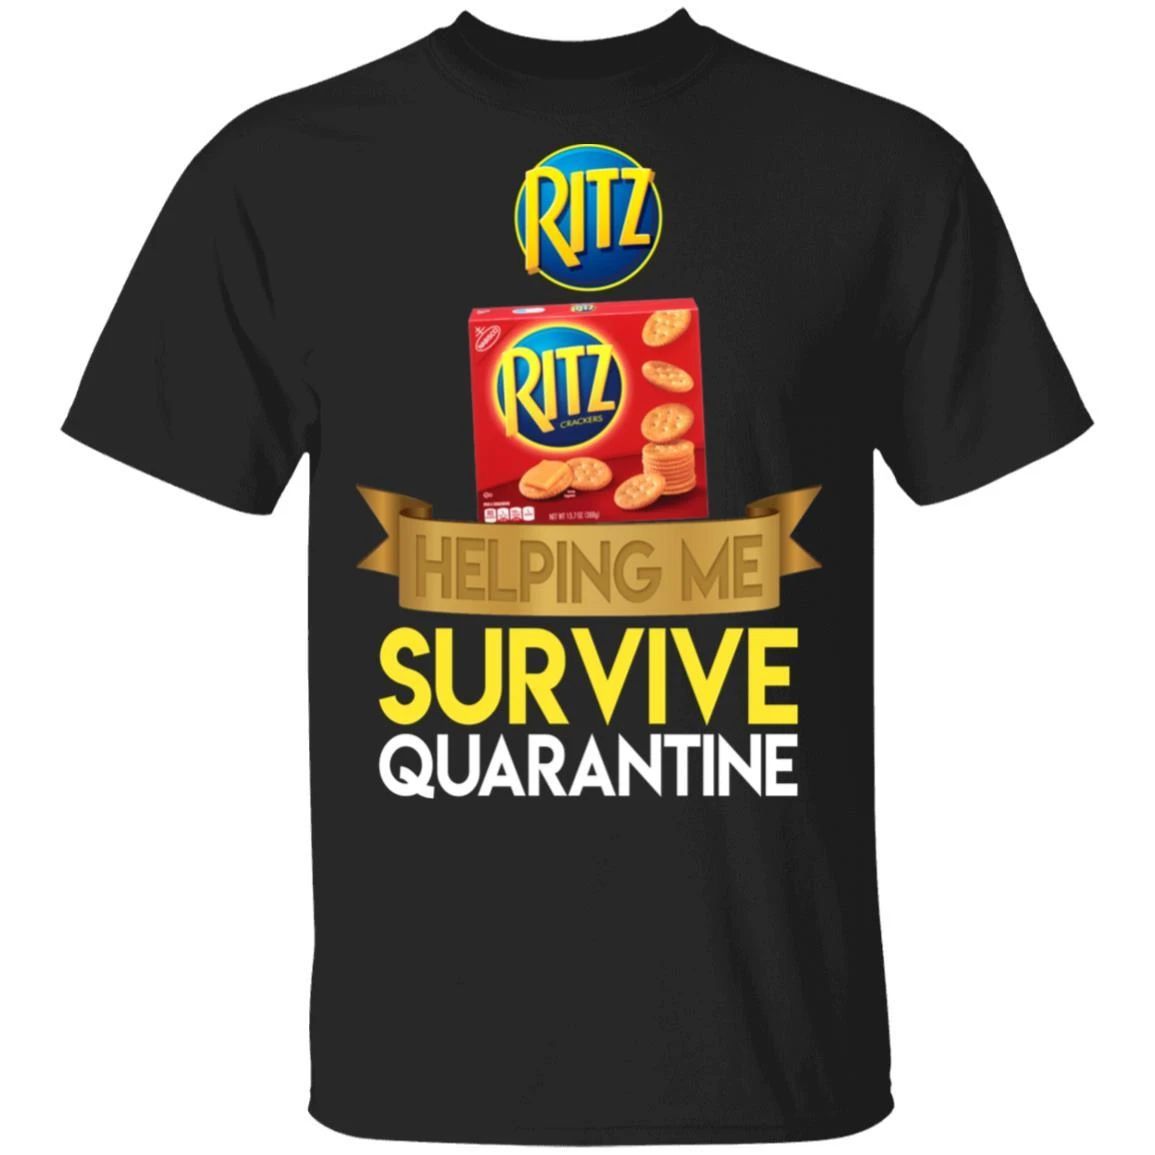 Ritz Helping Me Survive Quarantine T-shirt